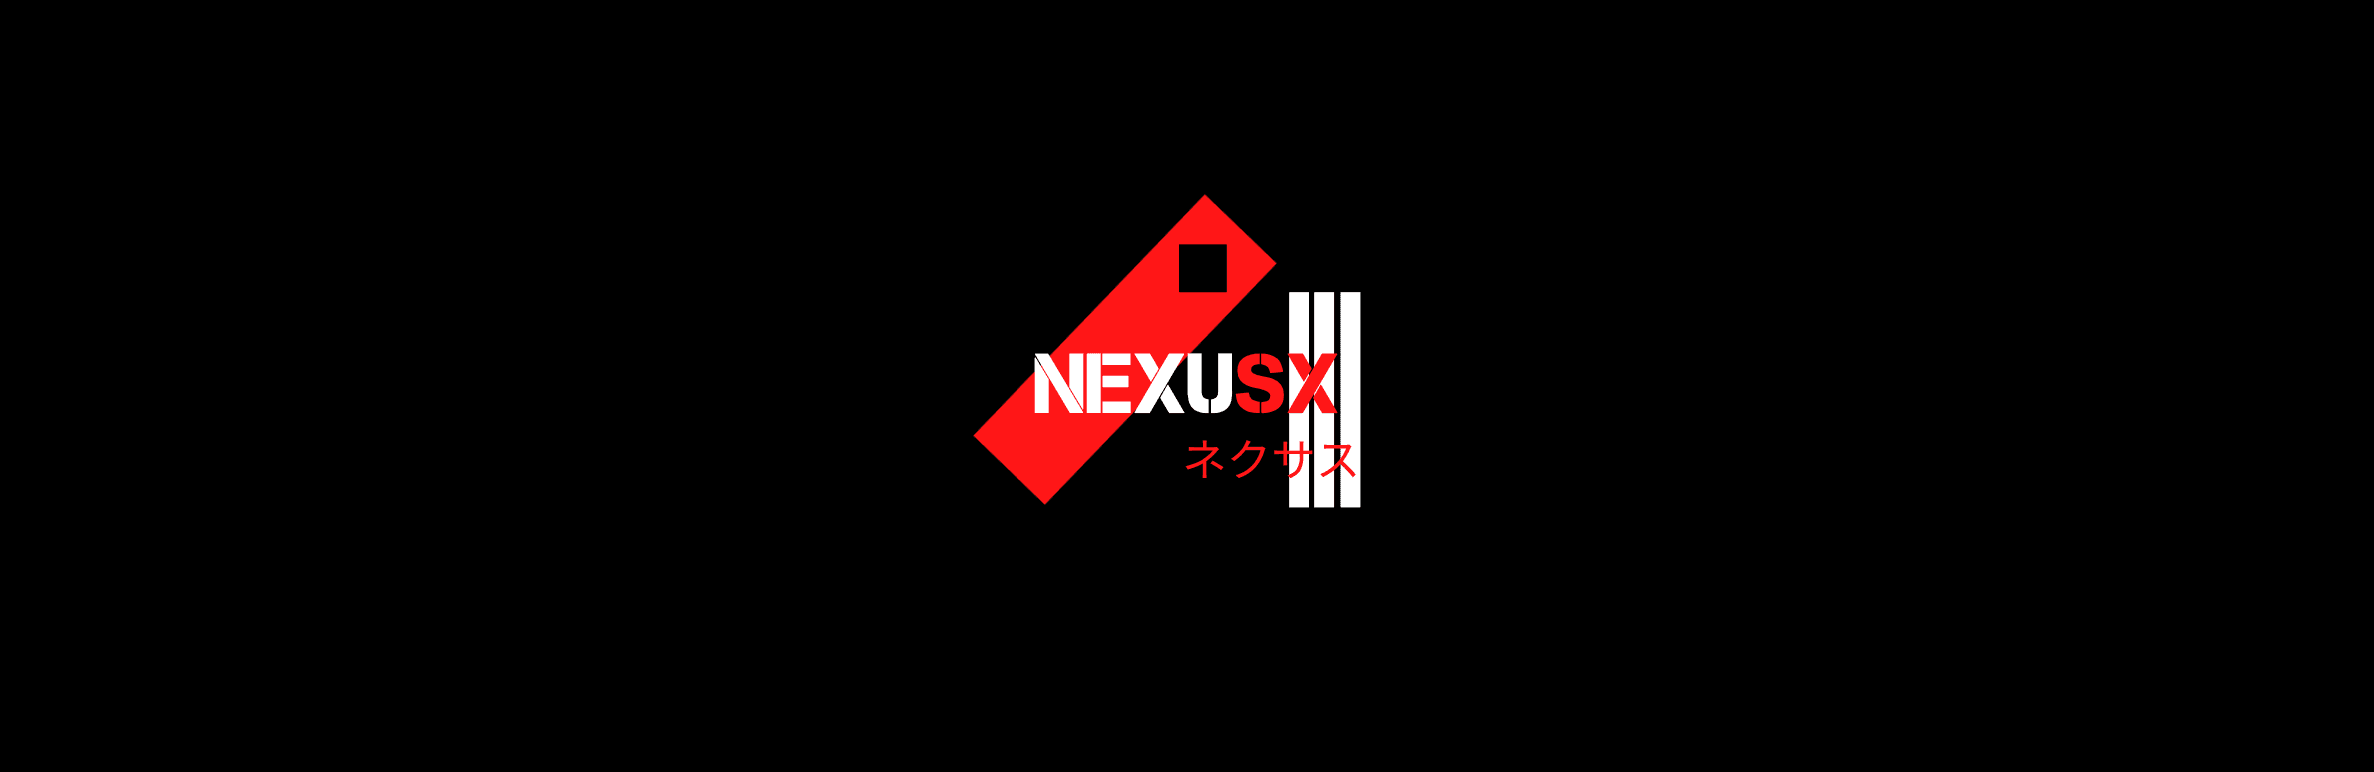 NexusX banner